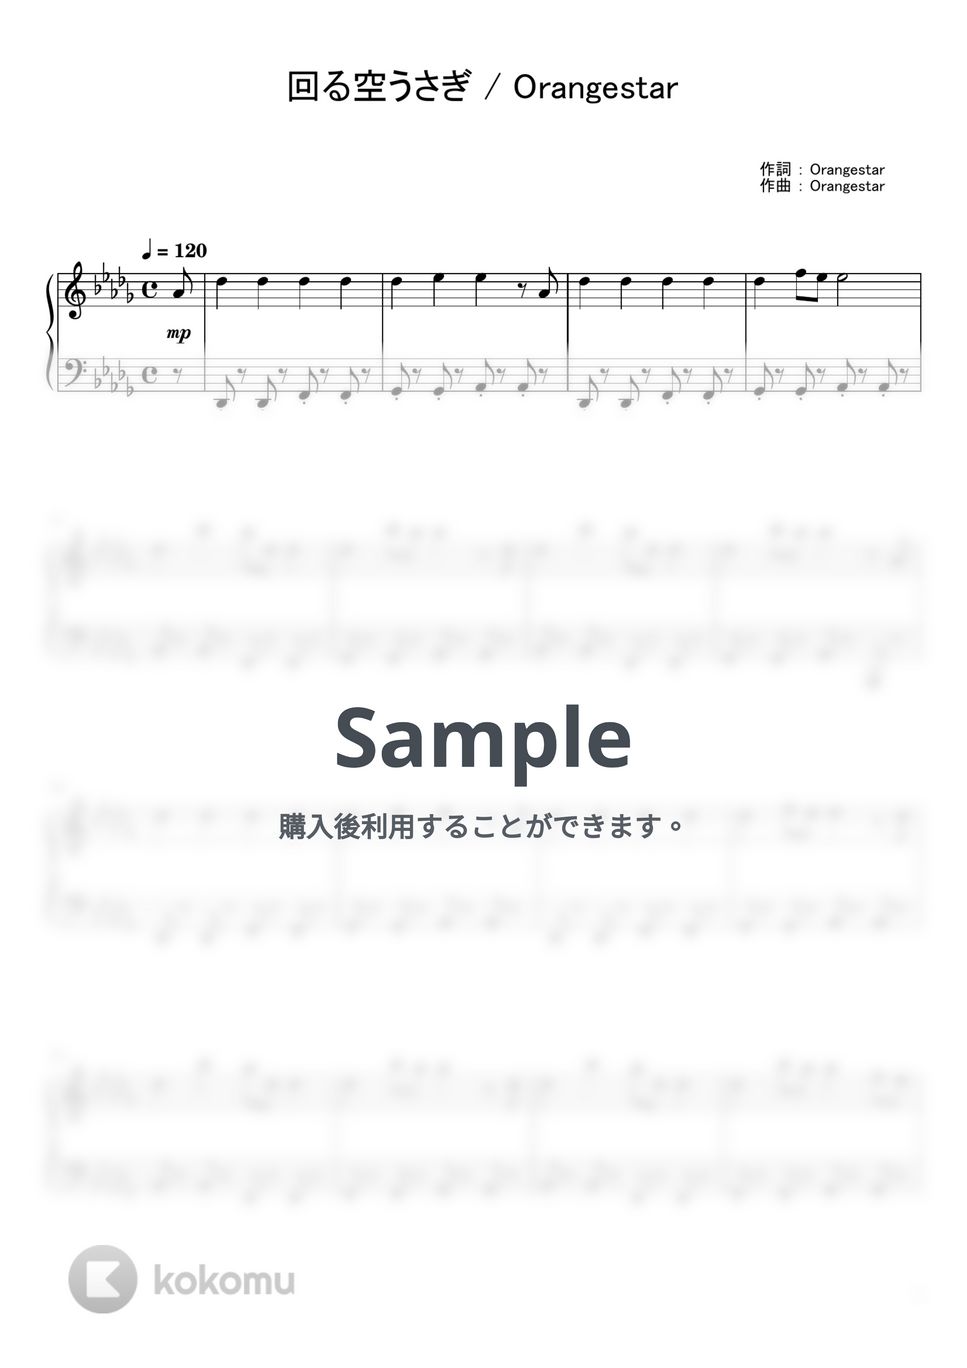 Orangestar - 回る空うさぎ (ピアノ 楽譜) by ピアノ猫